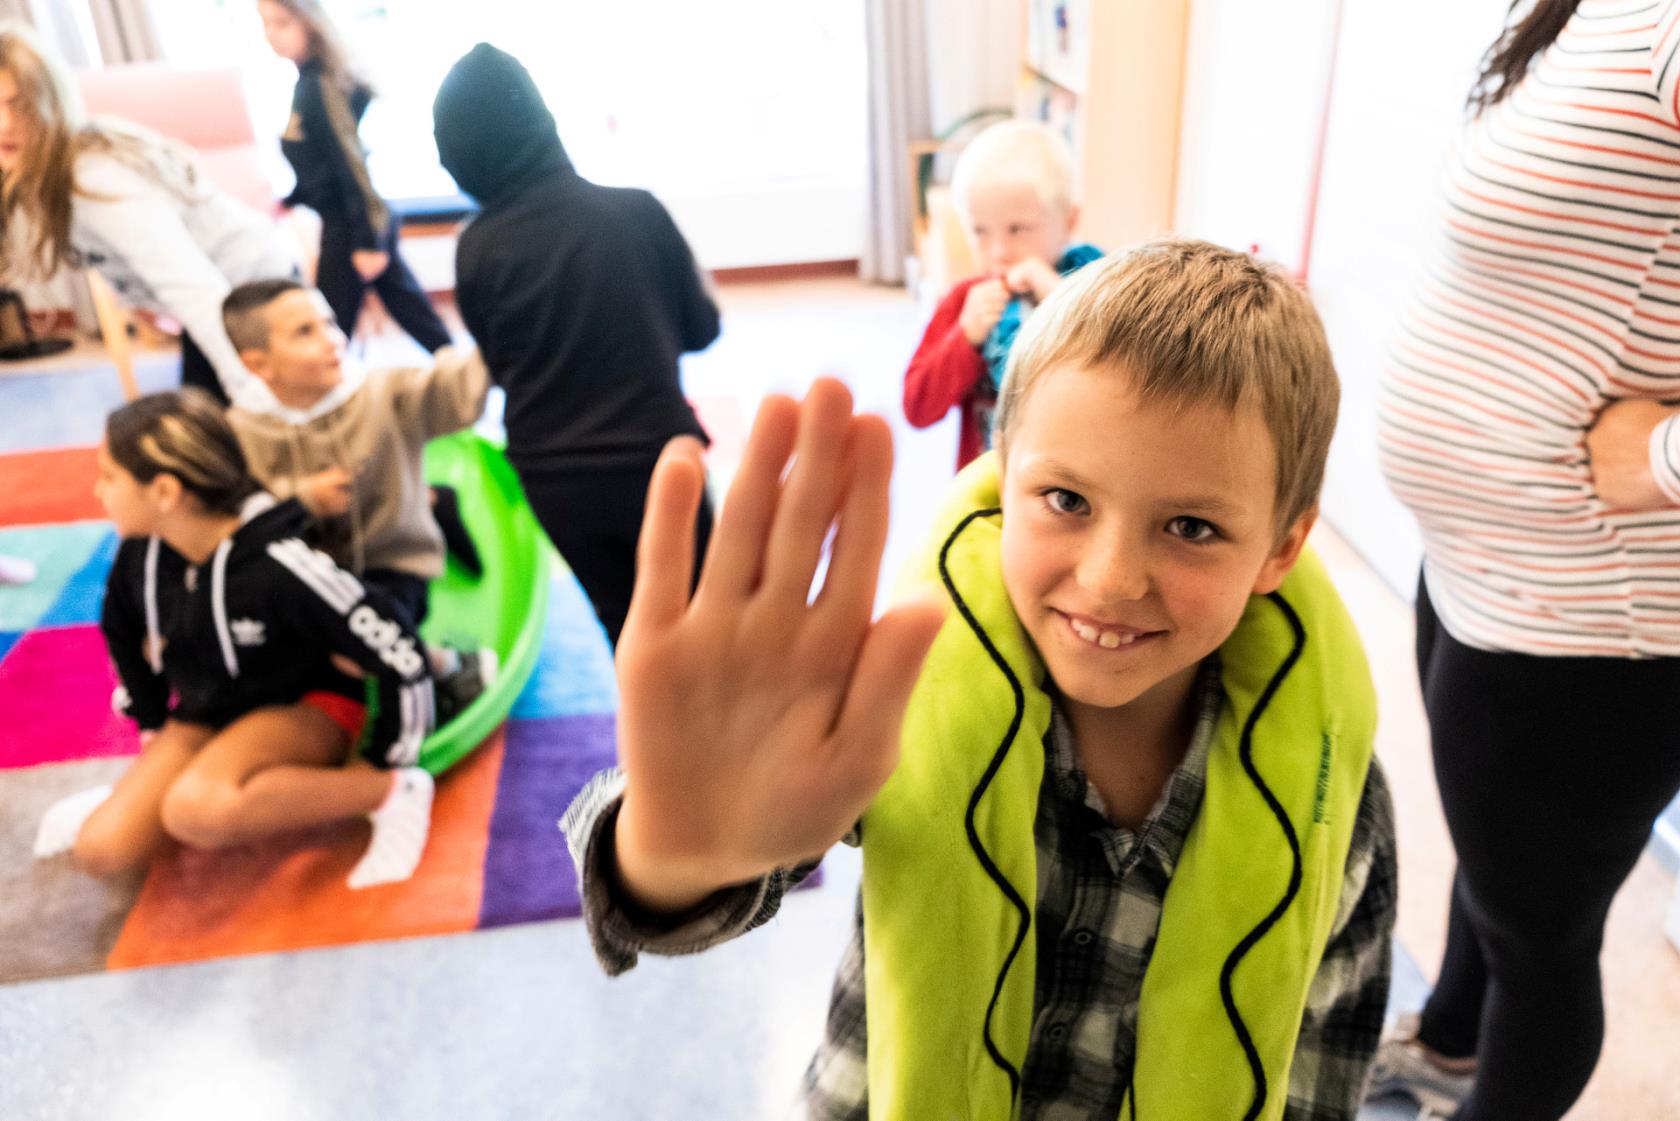 En pojke håller upp sin hand mot fotografen. Flera barn leker i bakgrunden.